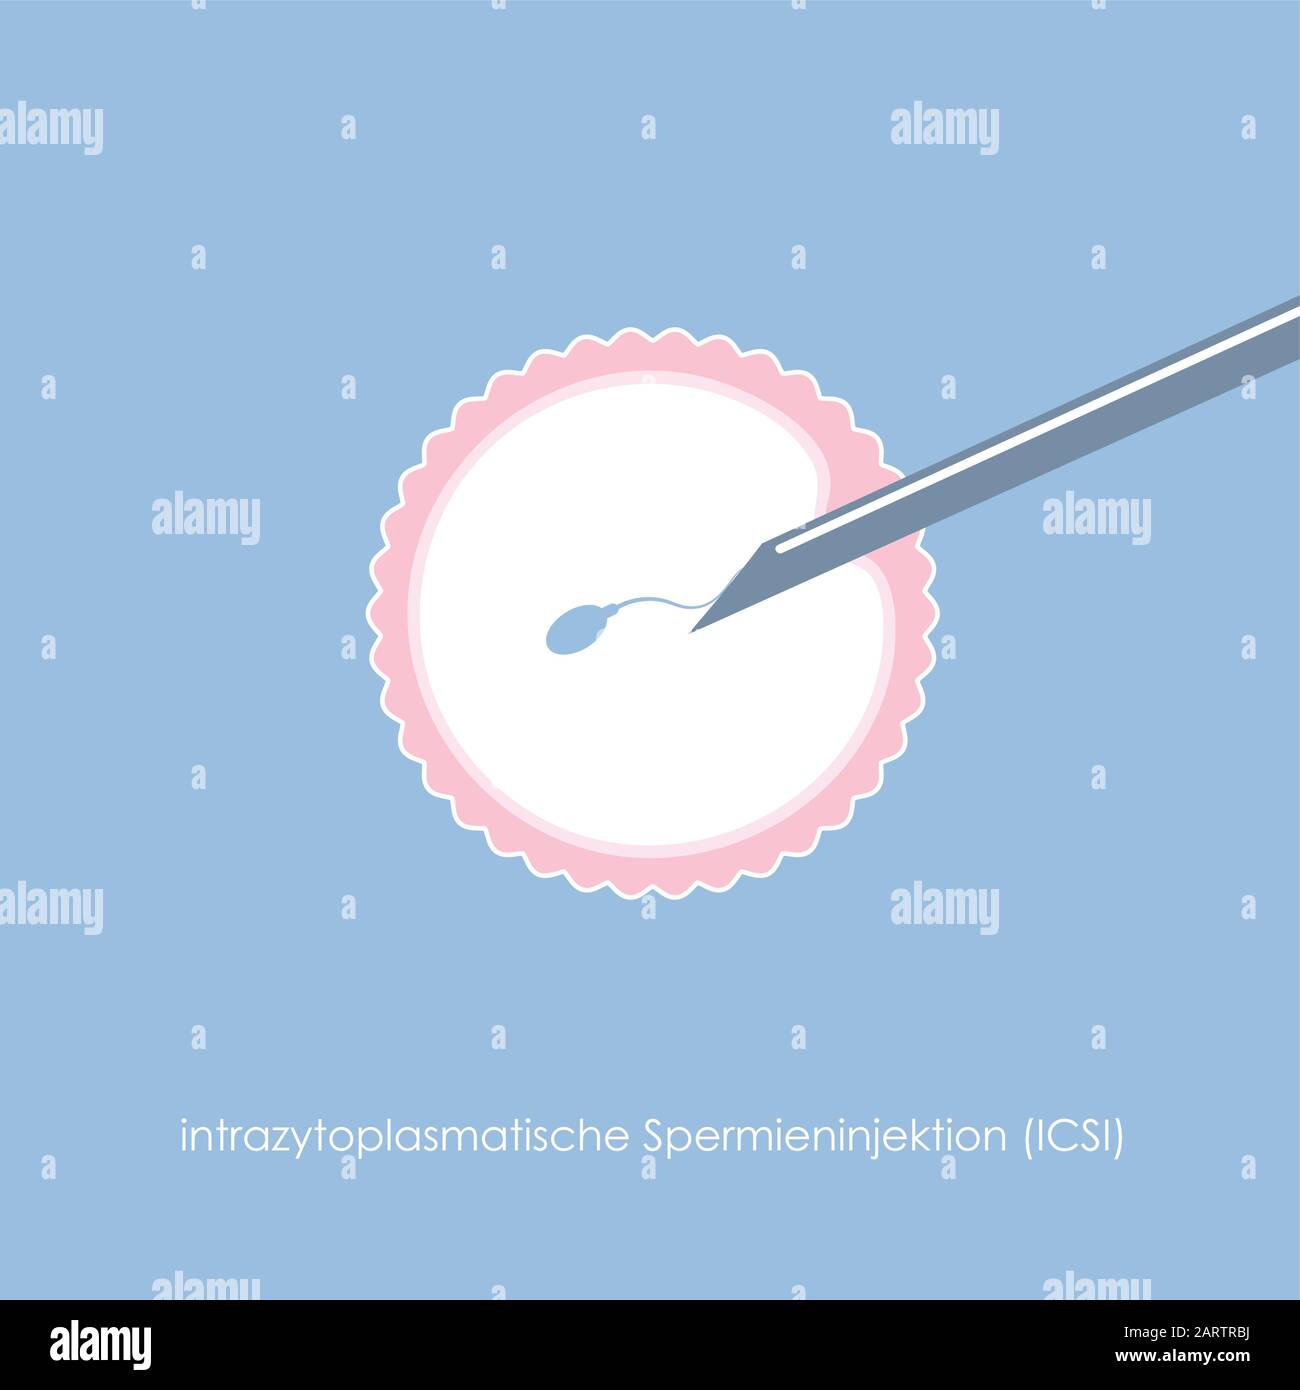 fertility reproduction of ovum and spermatozoon ICSI vector illustration EPS10 Stock Vector